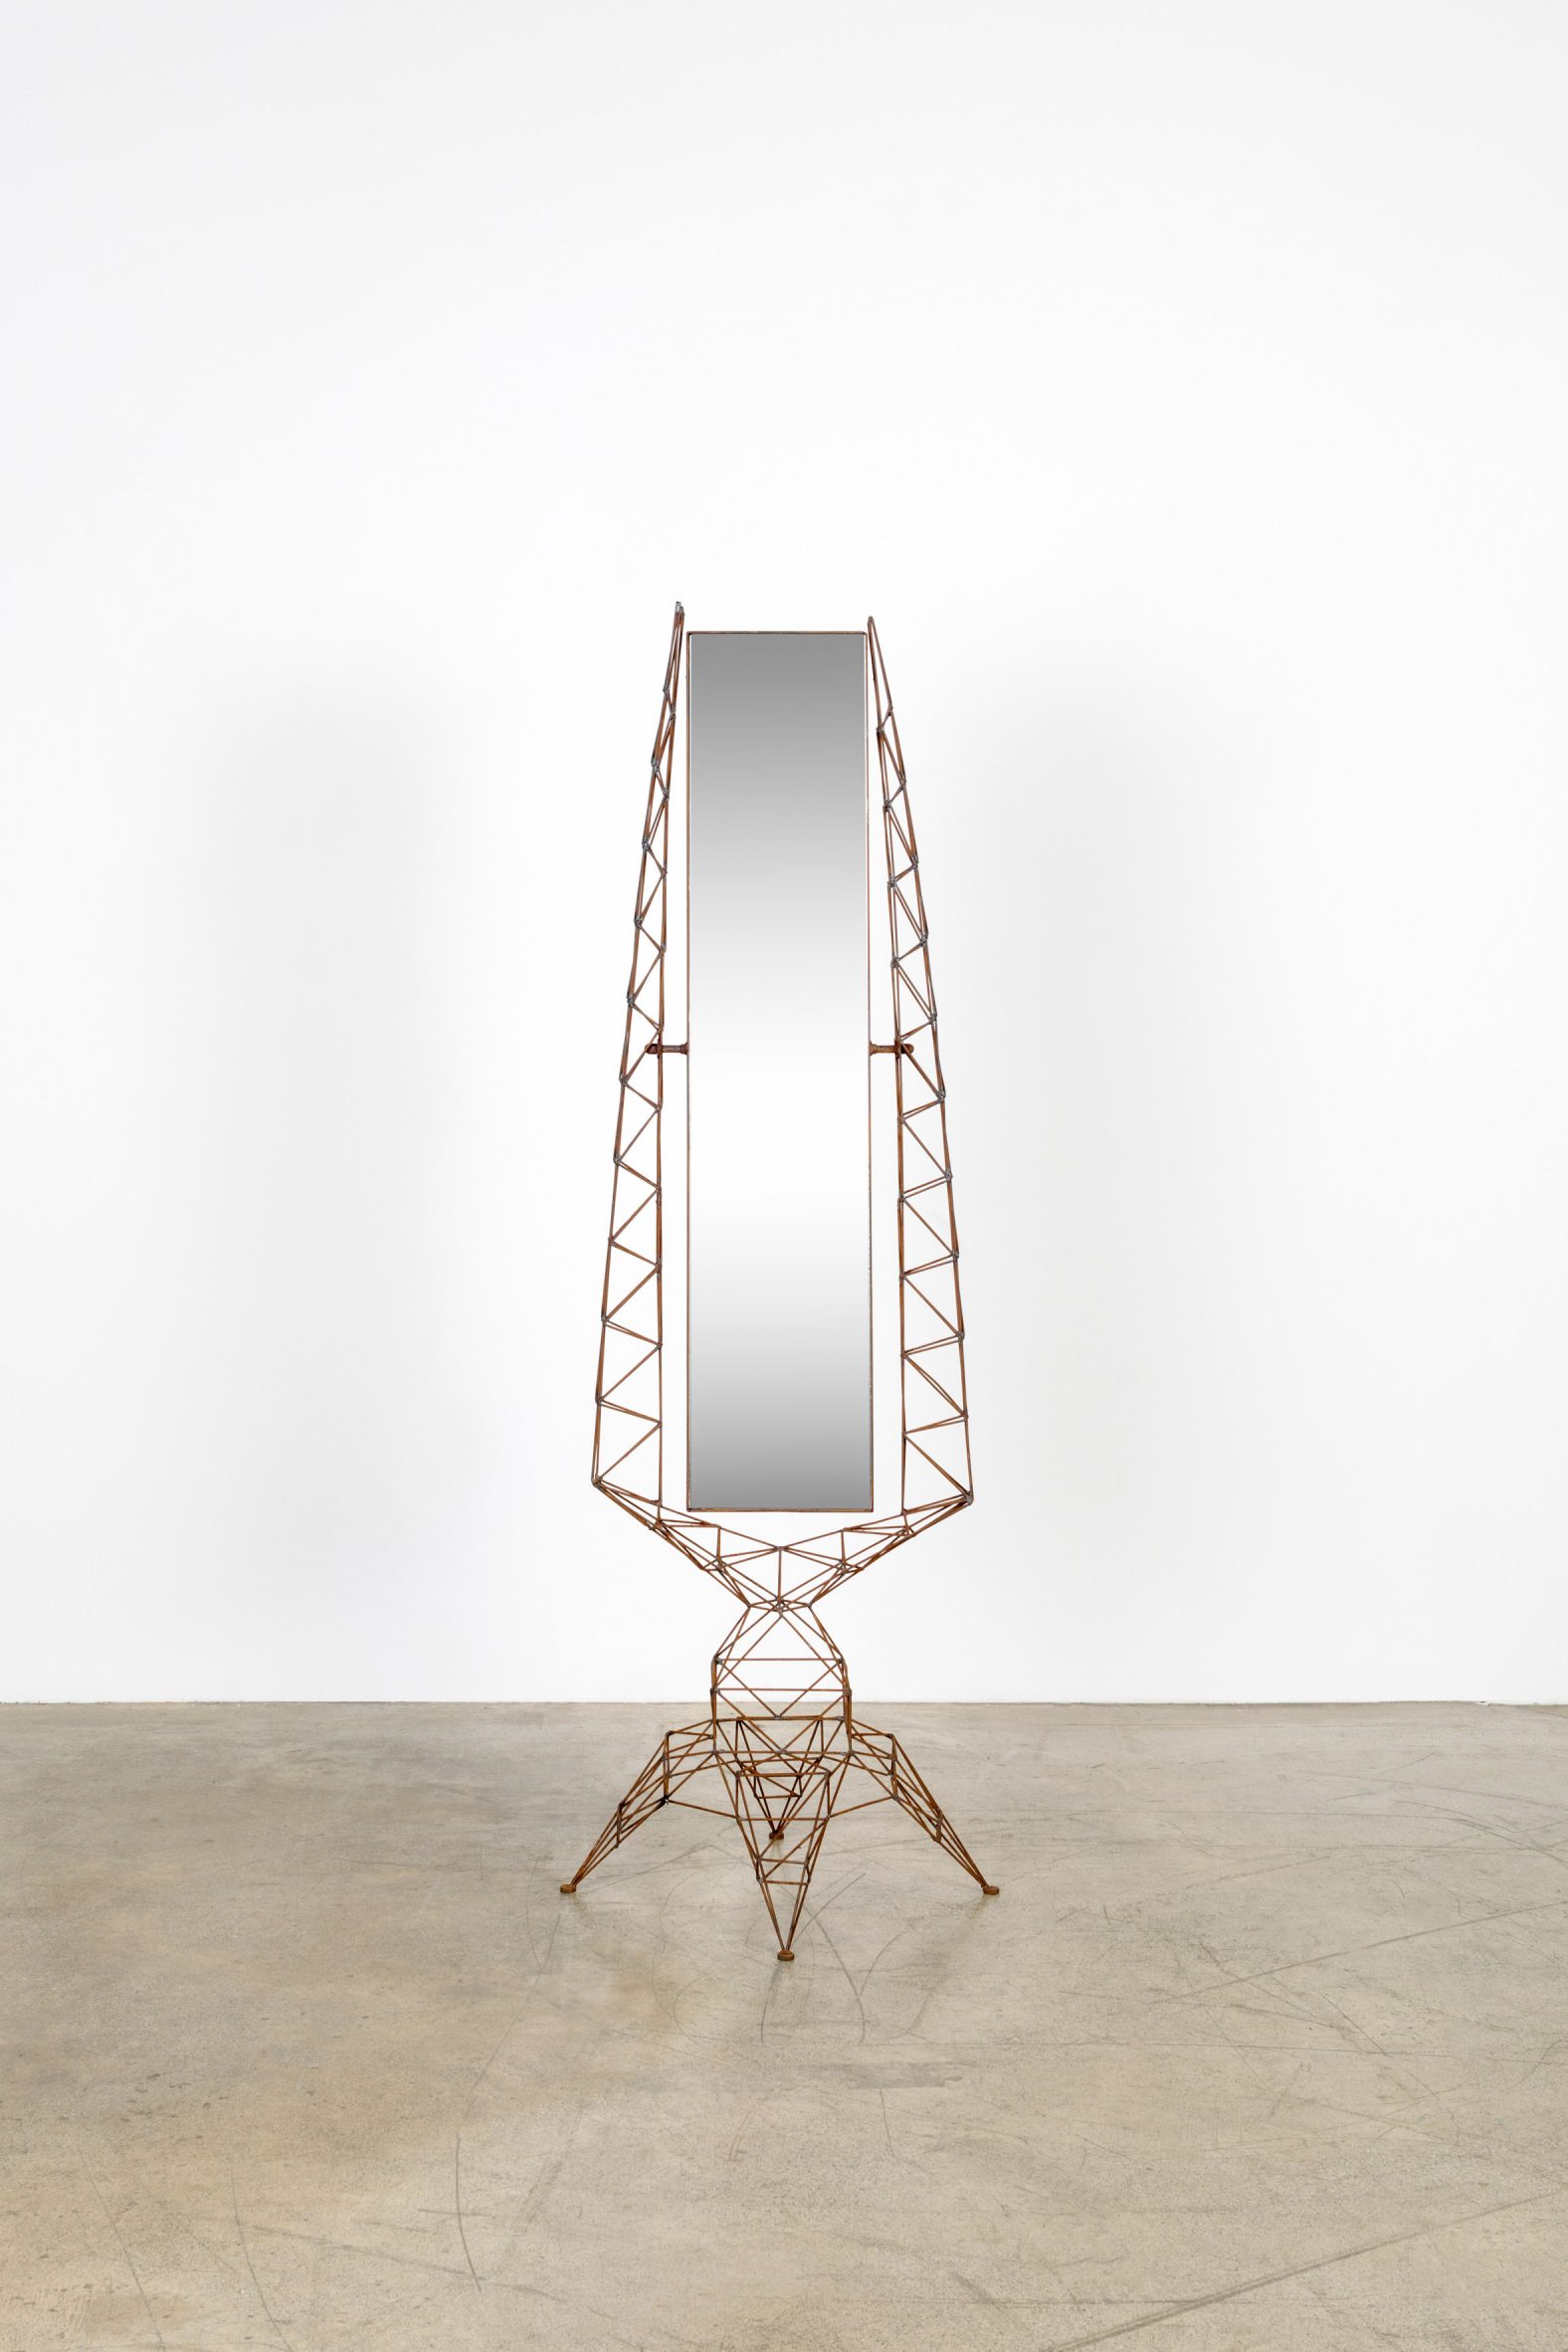 A mirror by Tom Dixon